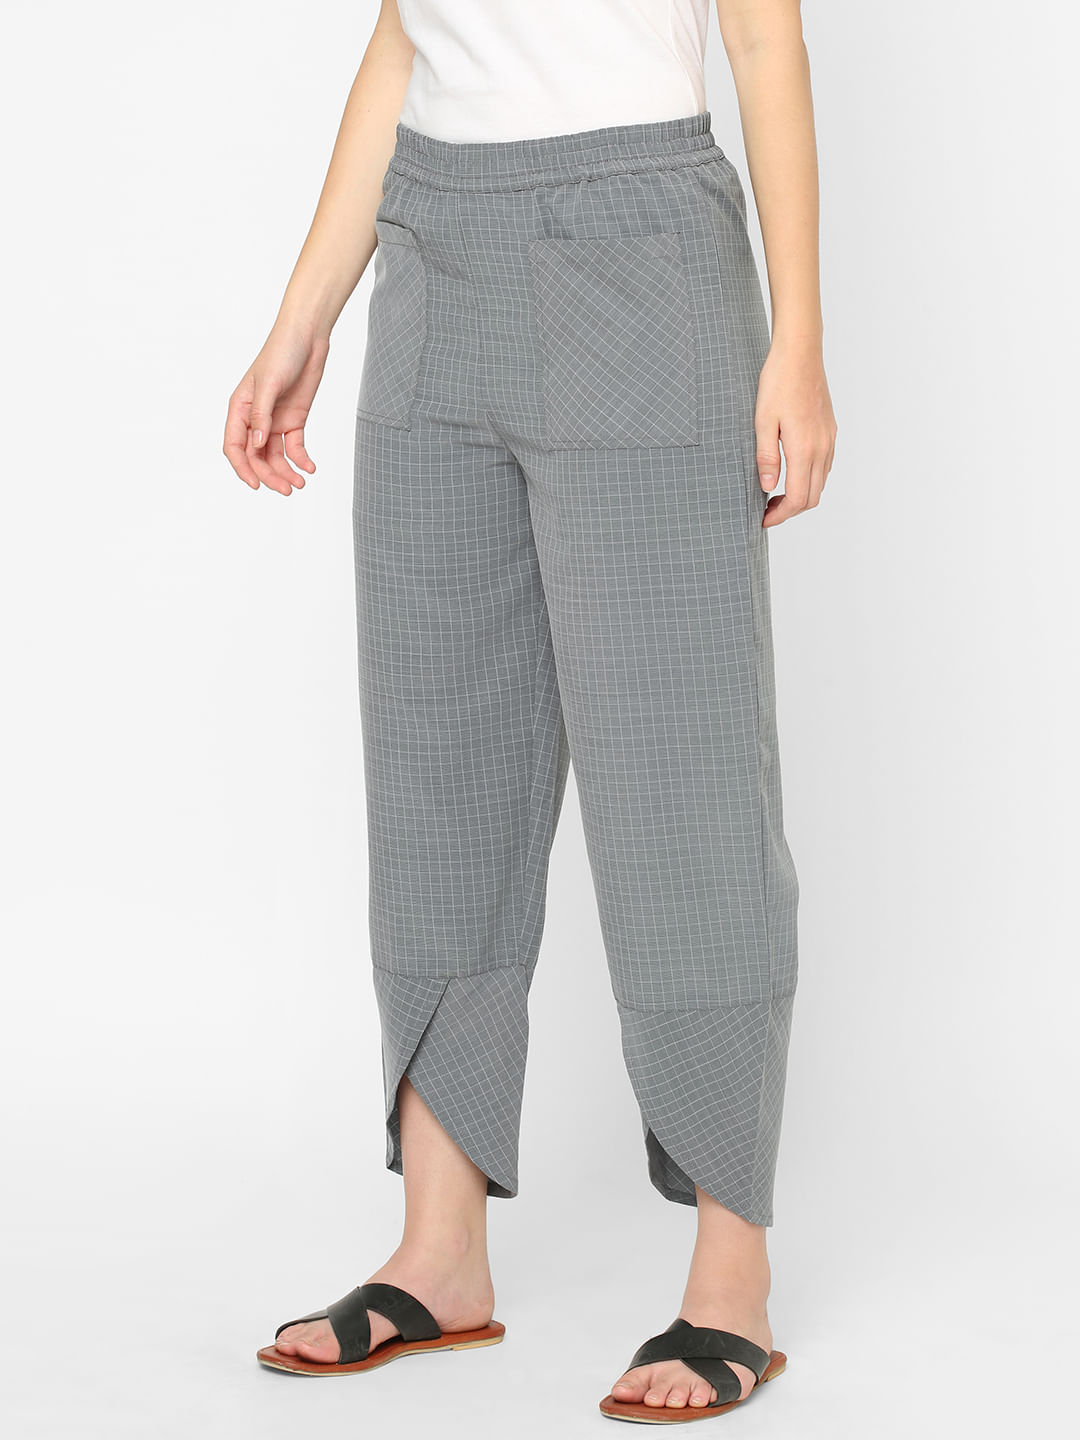 Tartan Grey Zipped Cargo Pants - Limited